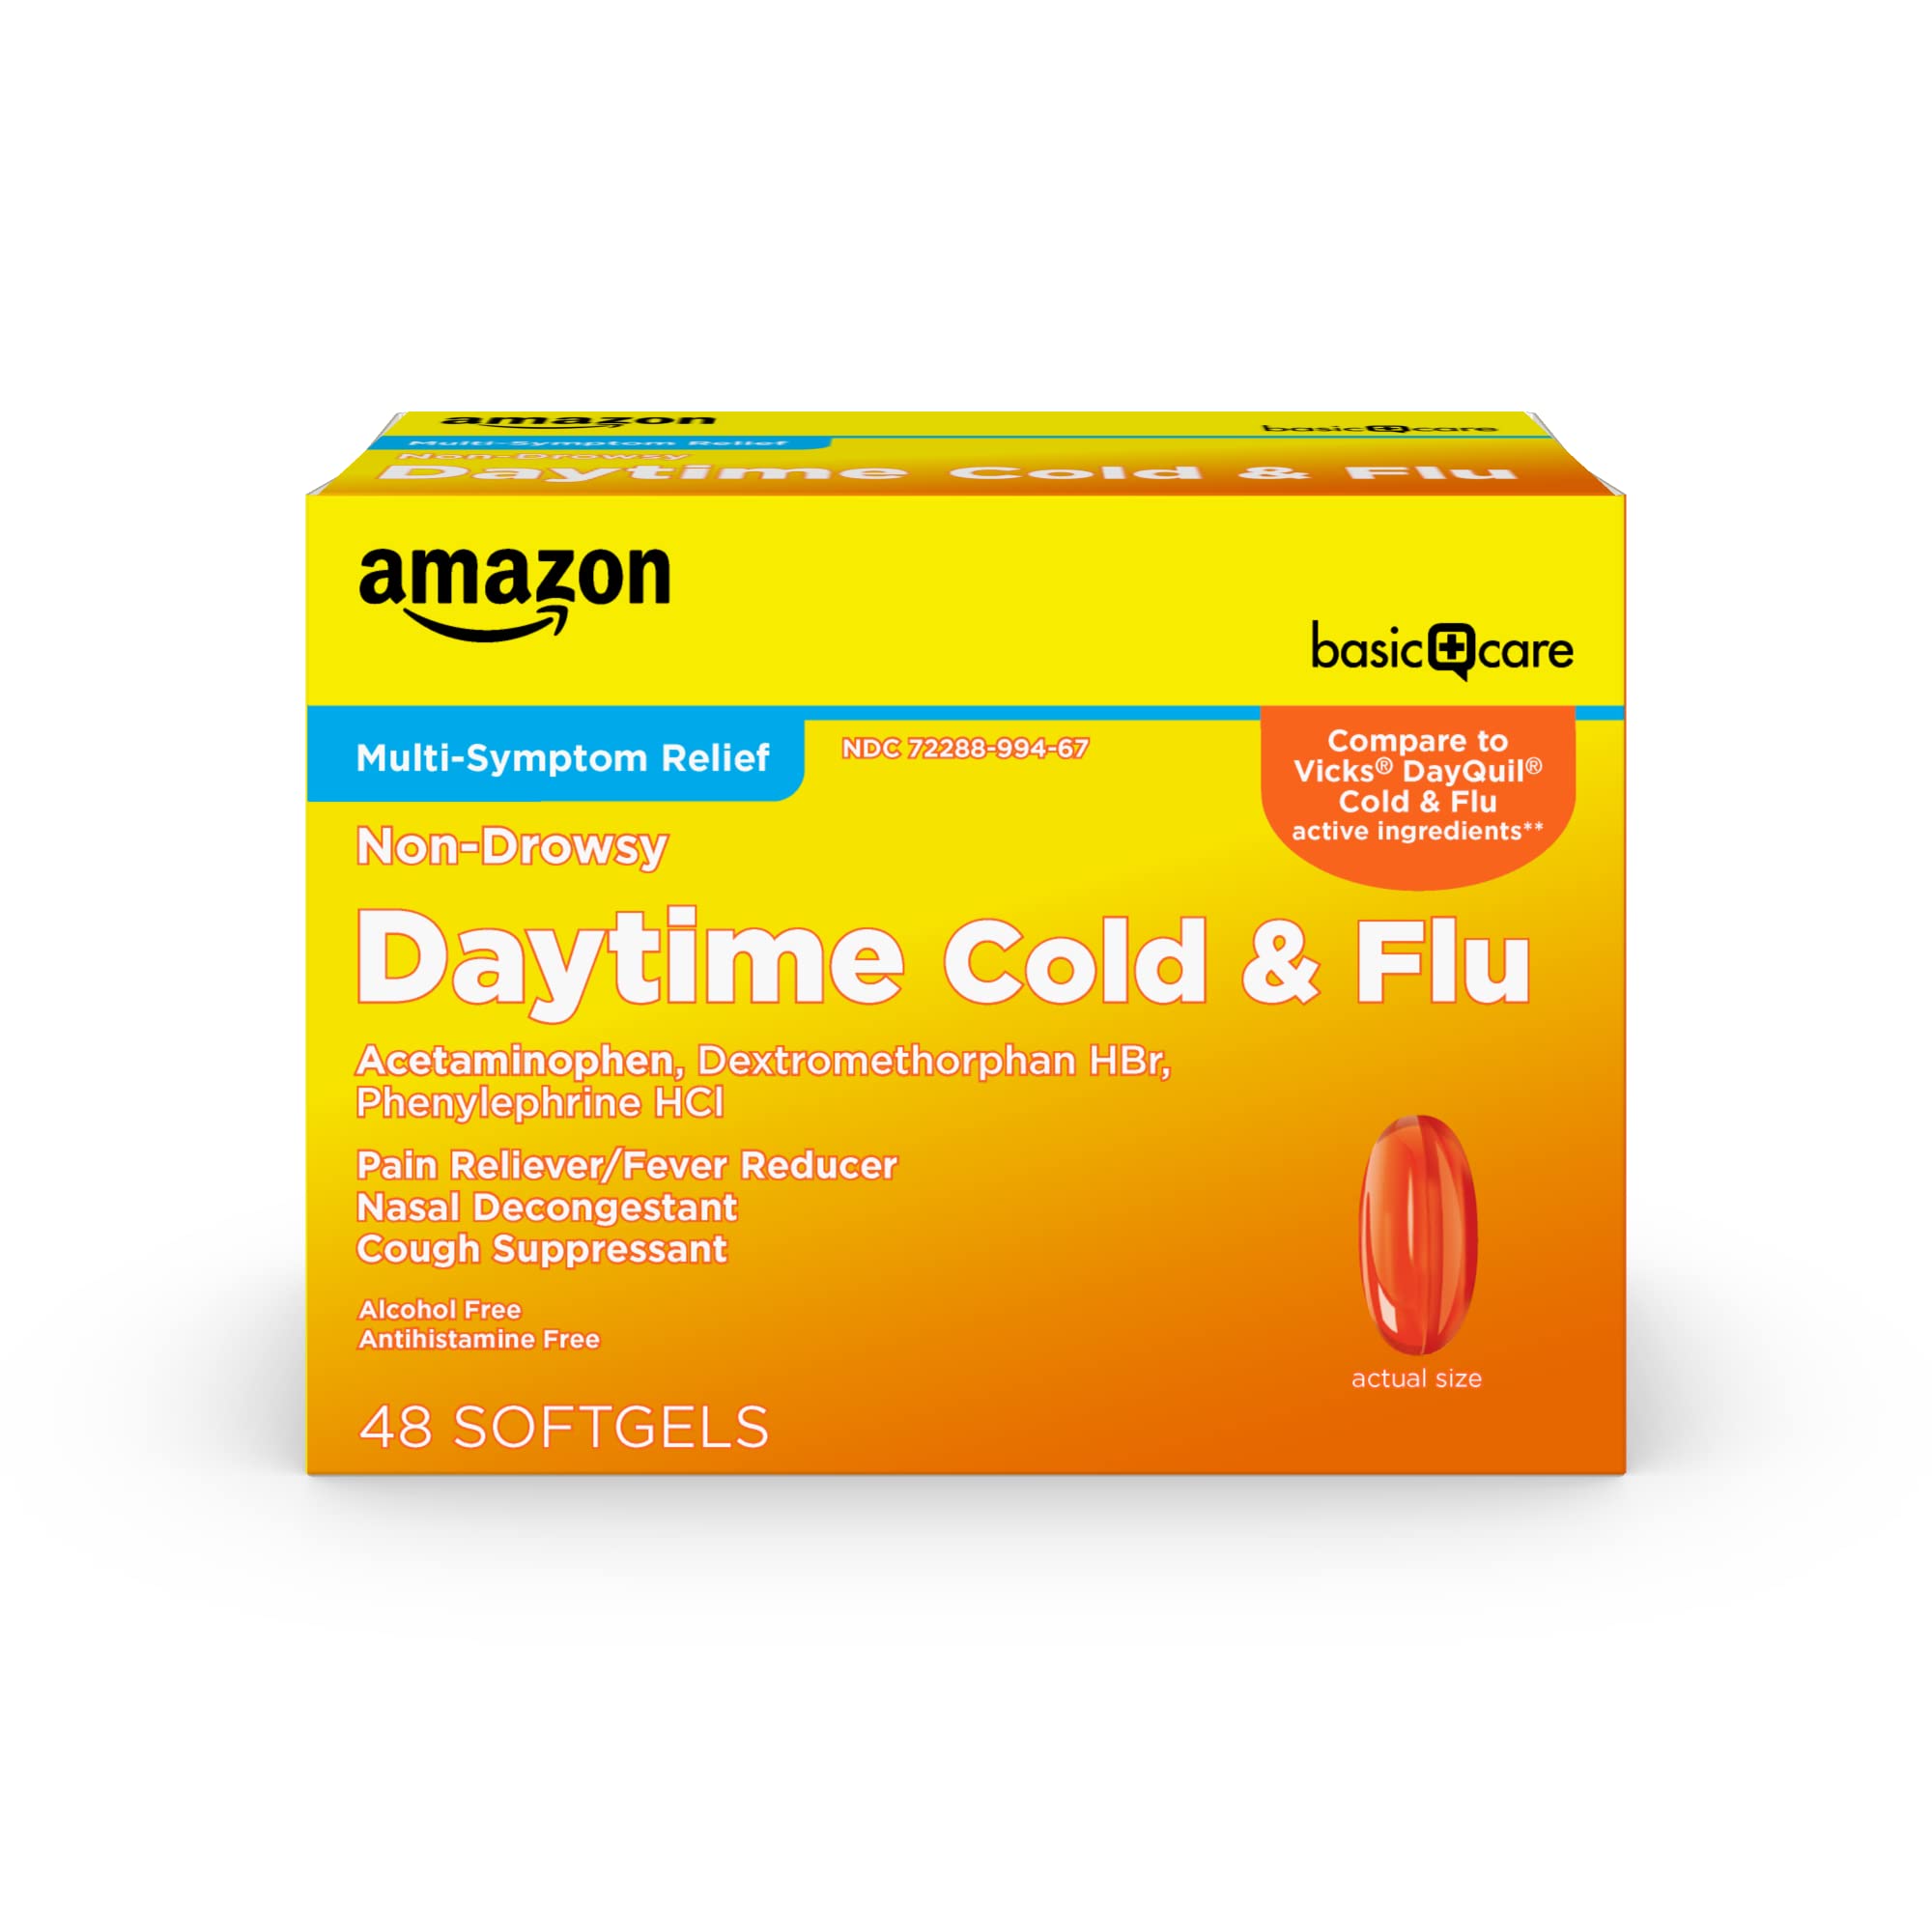 Basic Care Daytime Cold & Flu Liquid Caps Cold Care for Daytime Cold  and Flu, 48 Count 48 Count (Pack of 1) Daytime